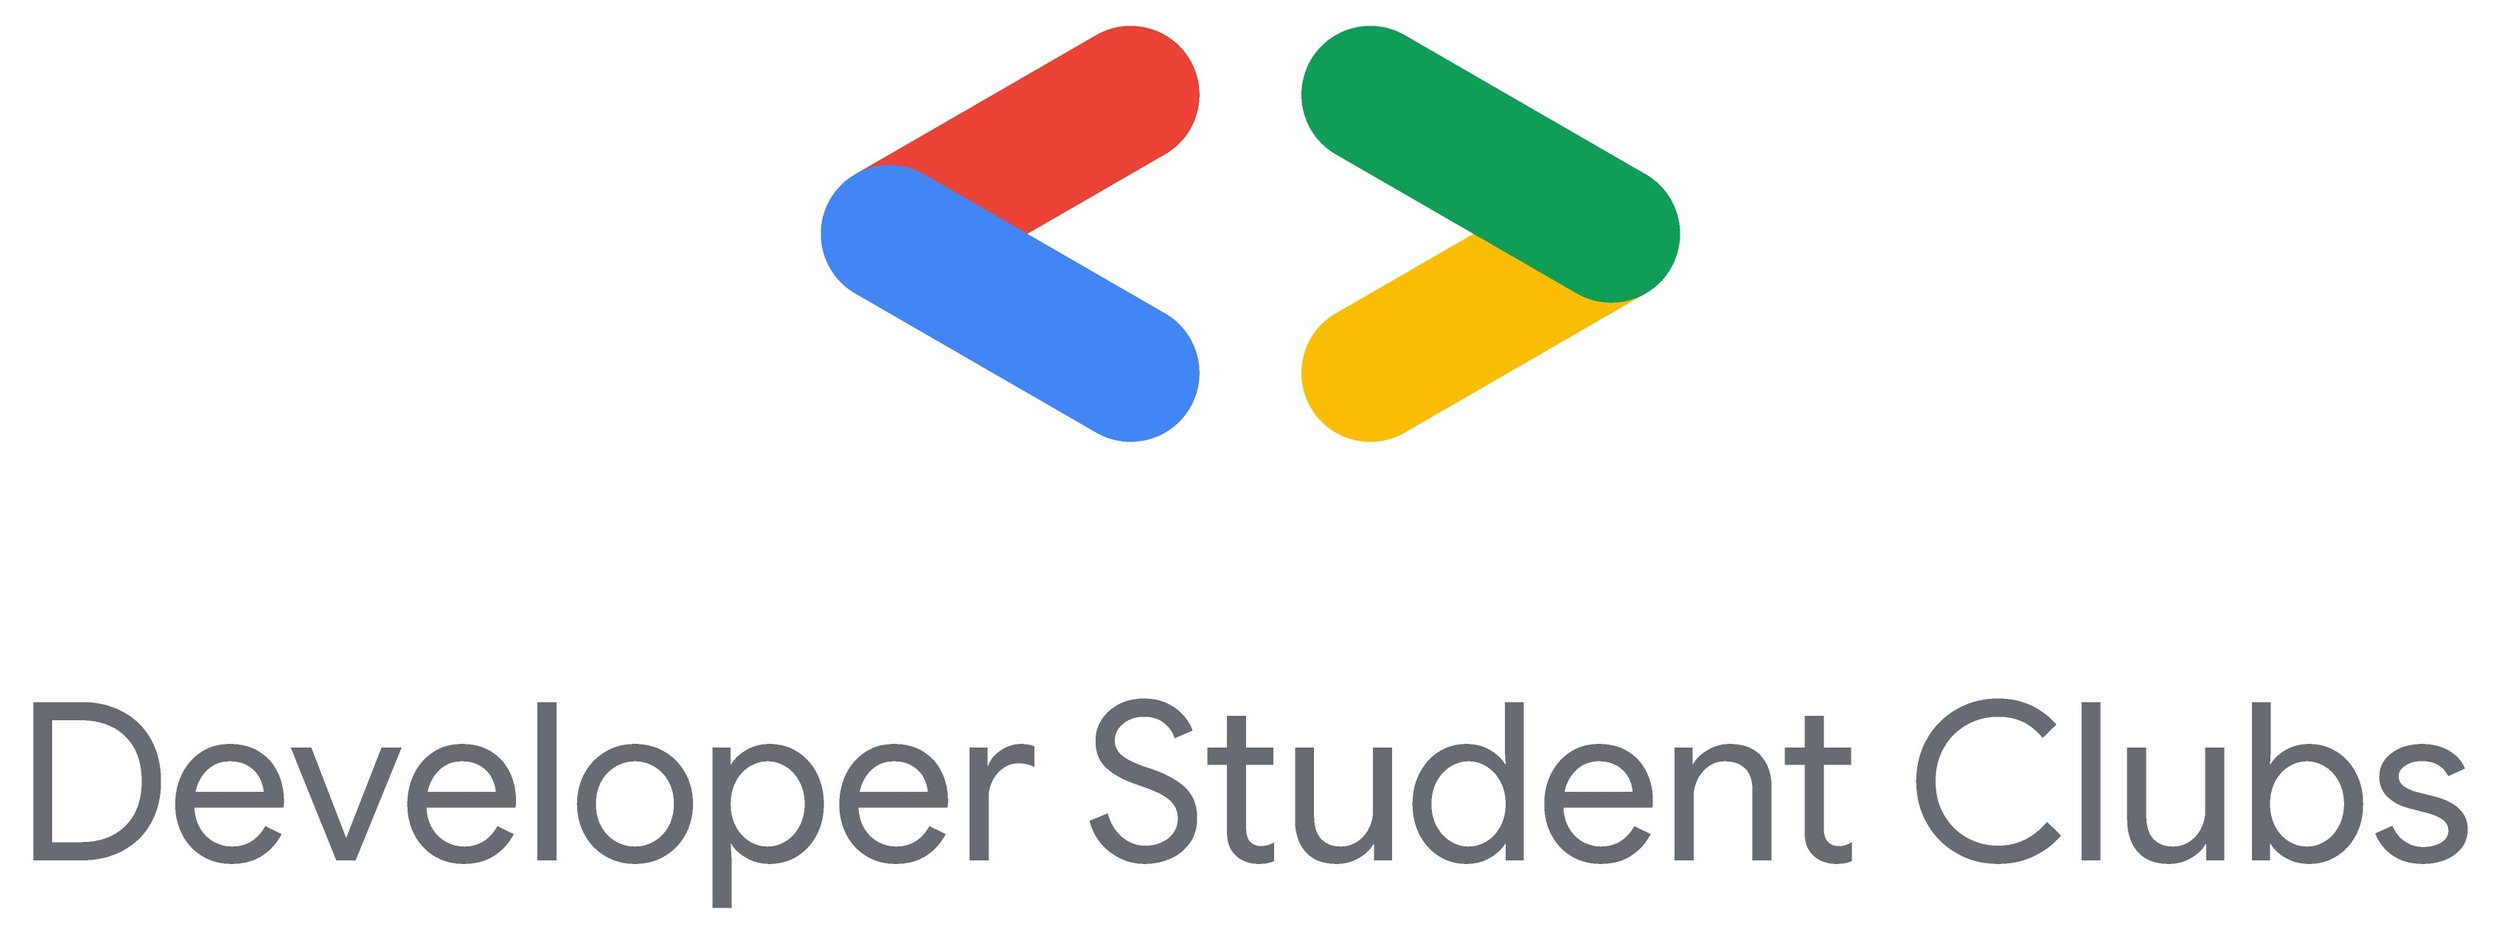 Google Developer Student Club MUN — MUN Students' Union